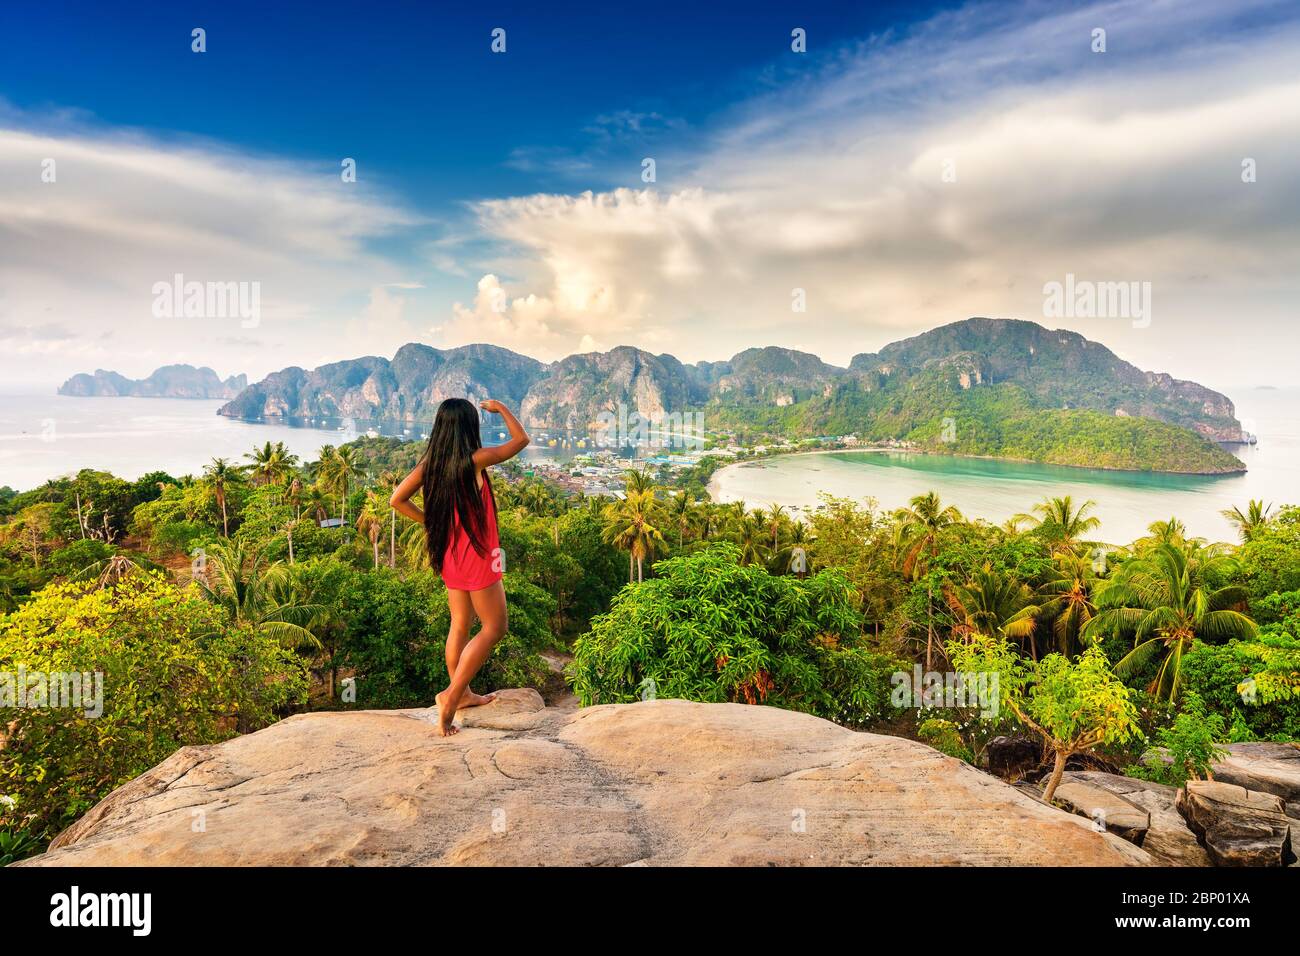 Krabi thailand dress hi-res stock photography and images - Alamy